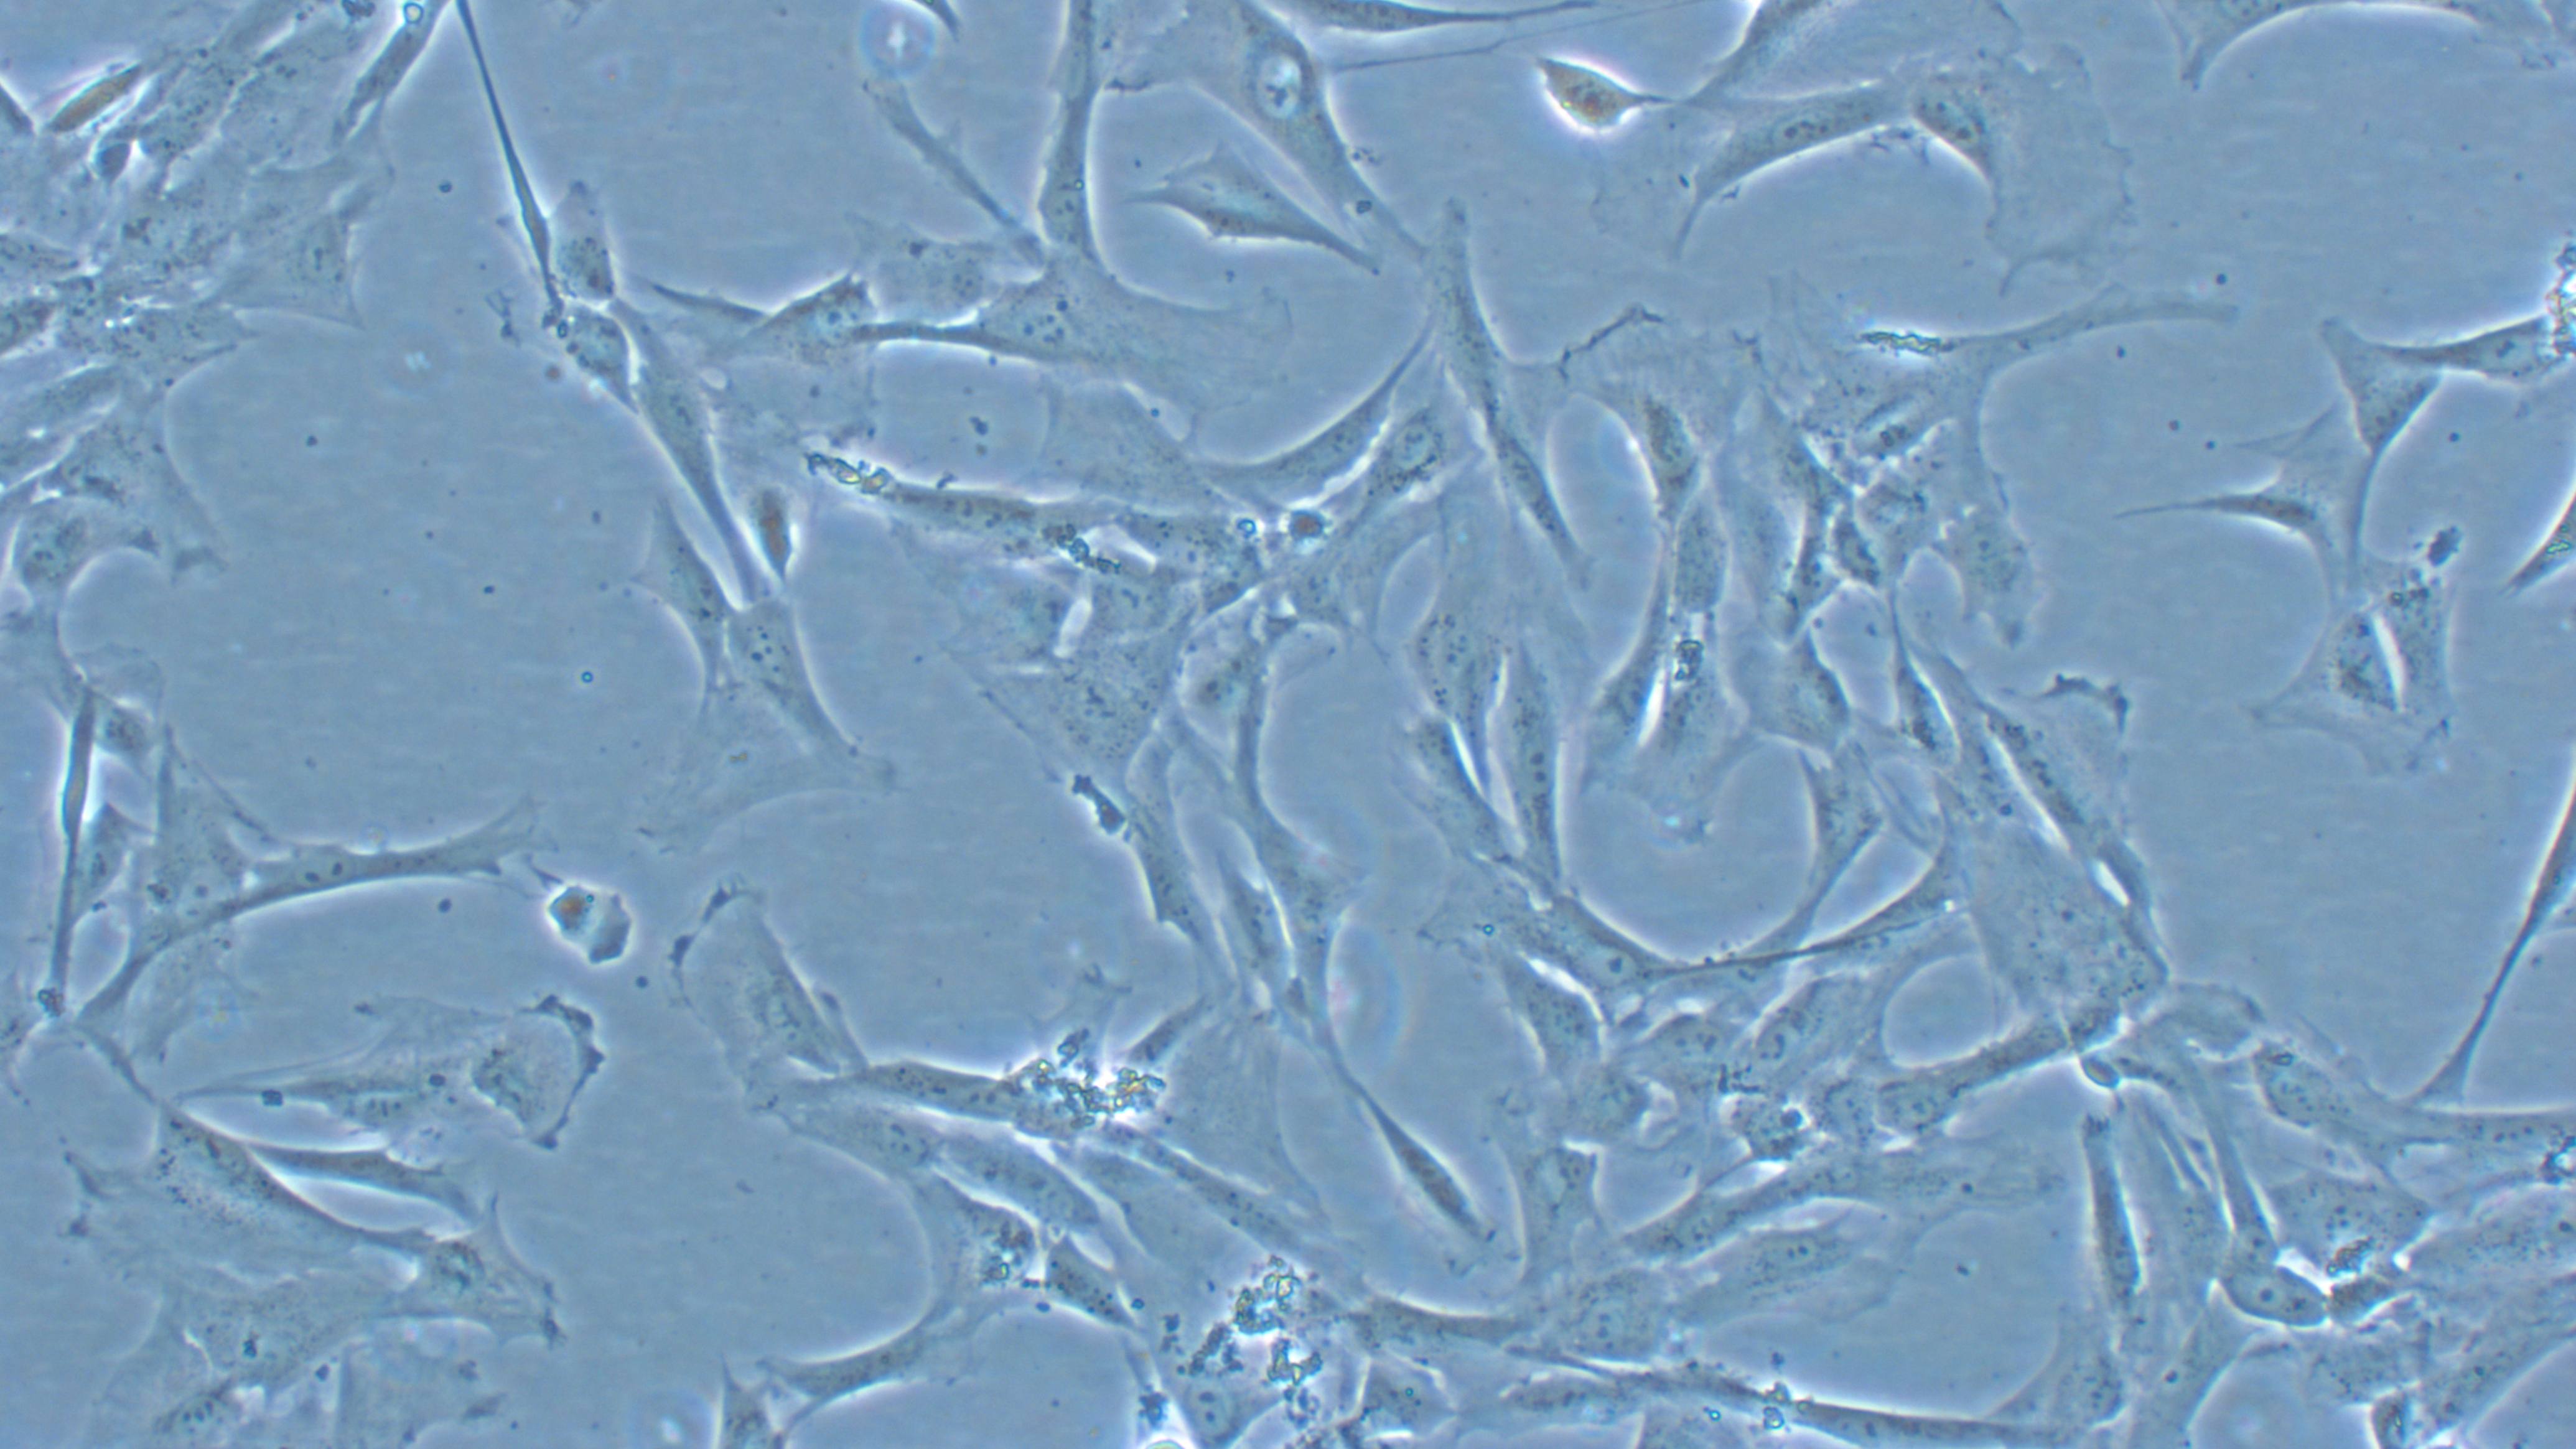 liver mesenchymal stromal cells under a microscope